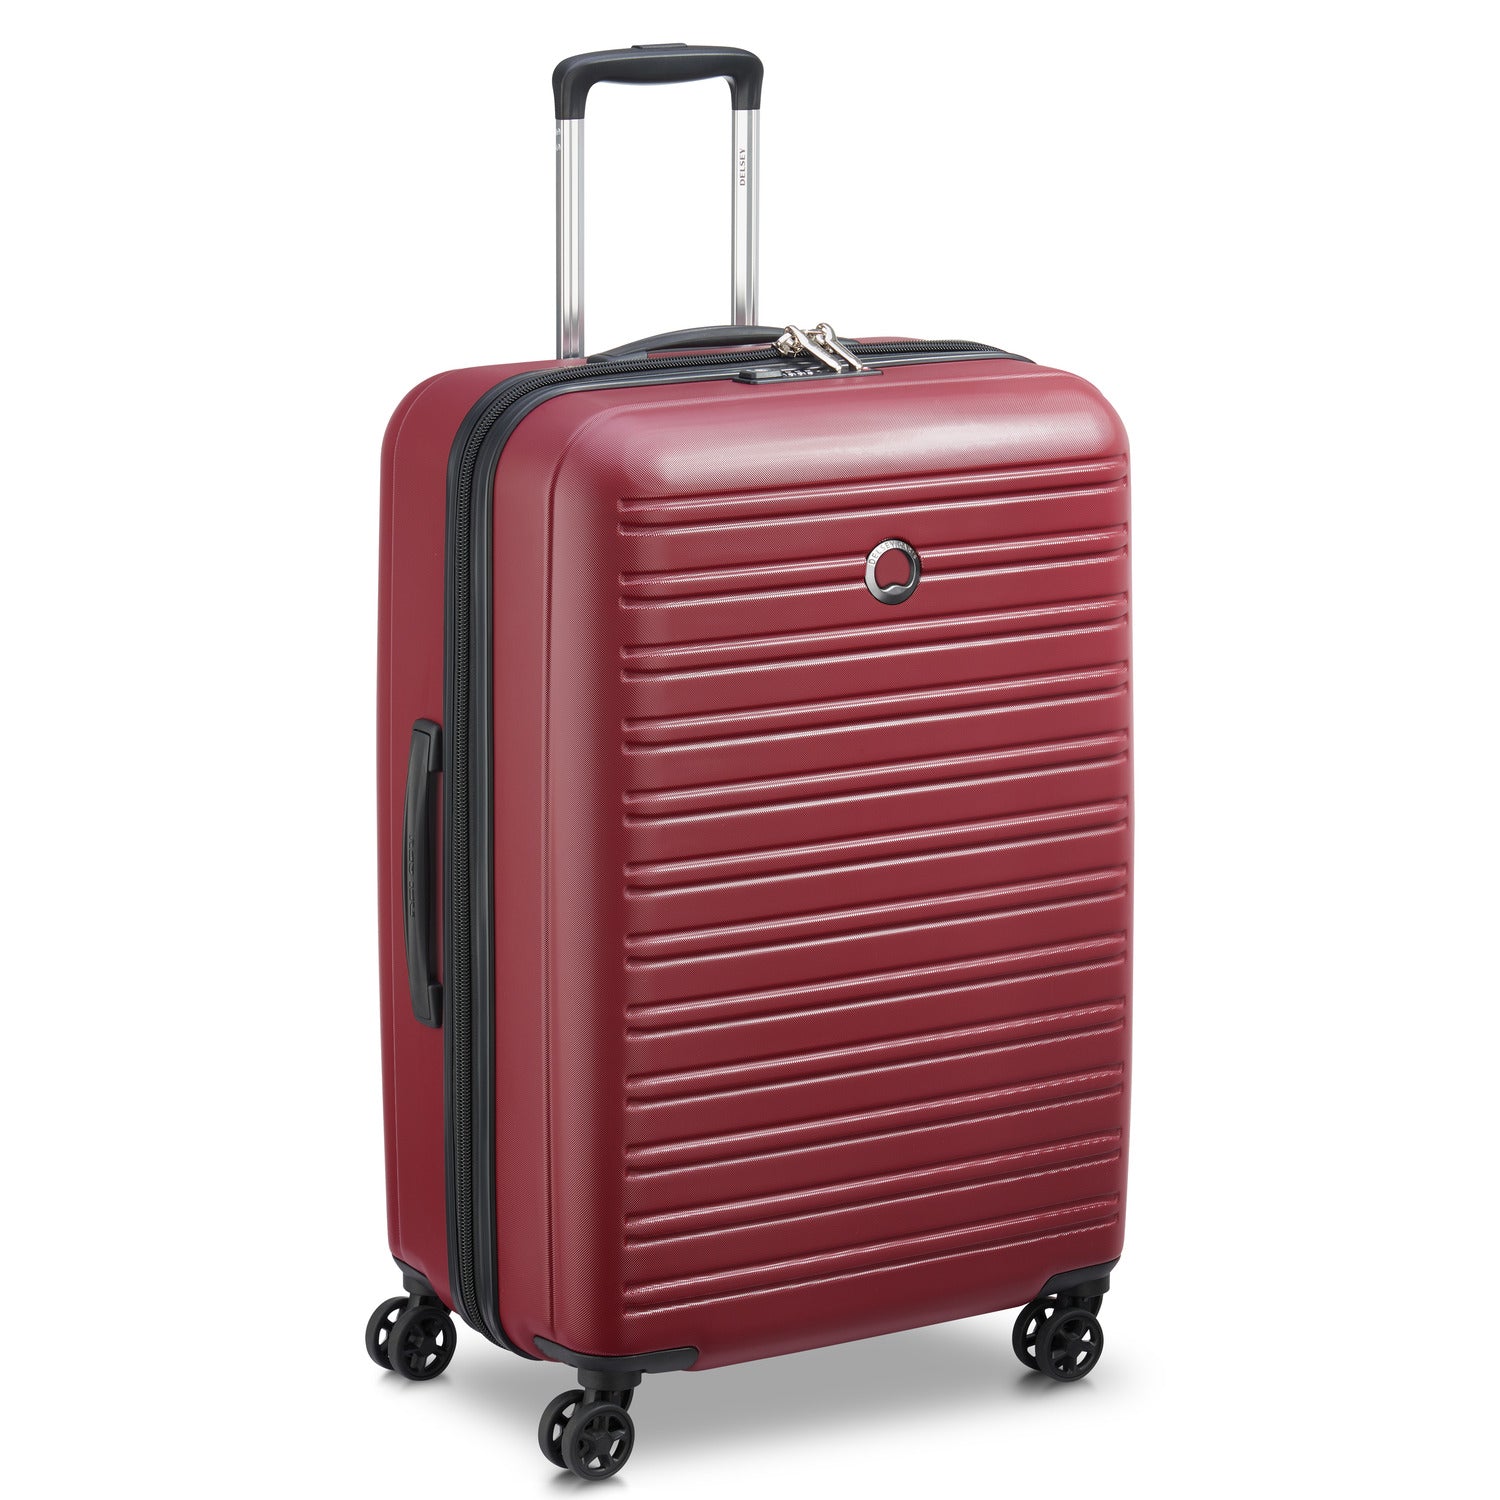 Delsey Segur 2.0 70cm Hardcase 4 Double Wheel Trolley Cabin Luggage Trolley Case Red - 00205882004